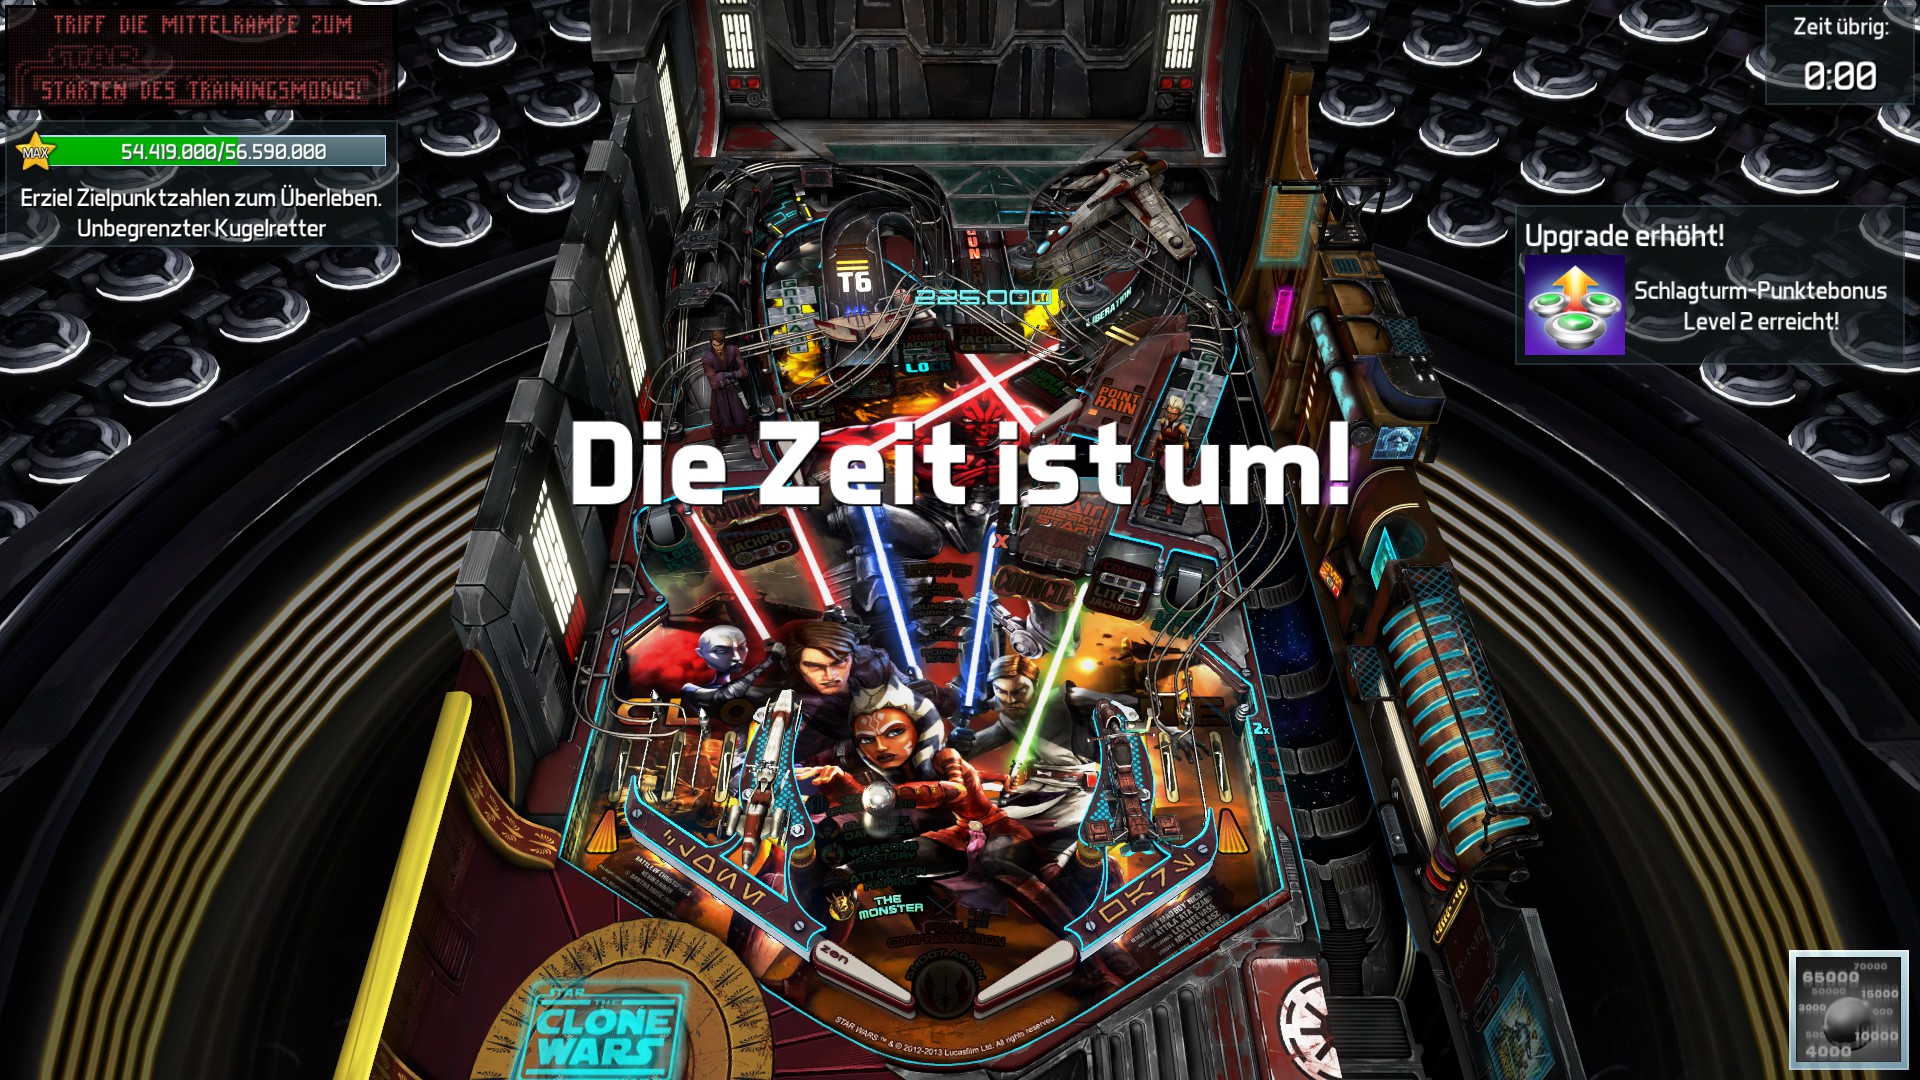 e2e4: Pinball FX3: Star Wars Pinball: The Clone Wars [Survivor] (PC) 54,419,000 points on 2022-06-22 16:15:38